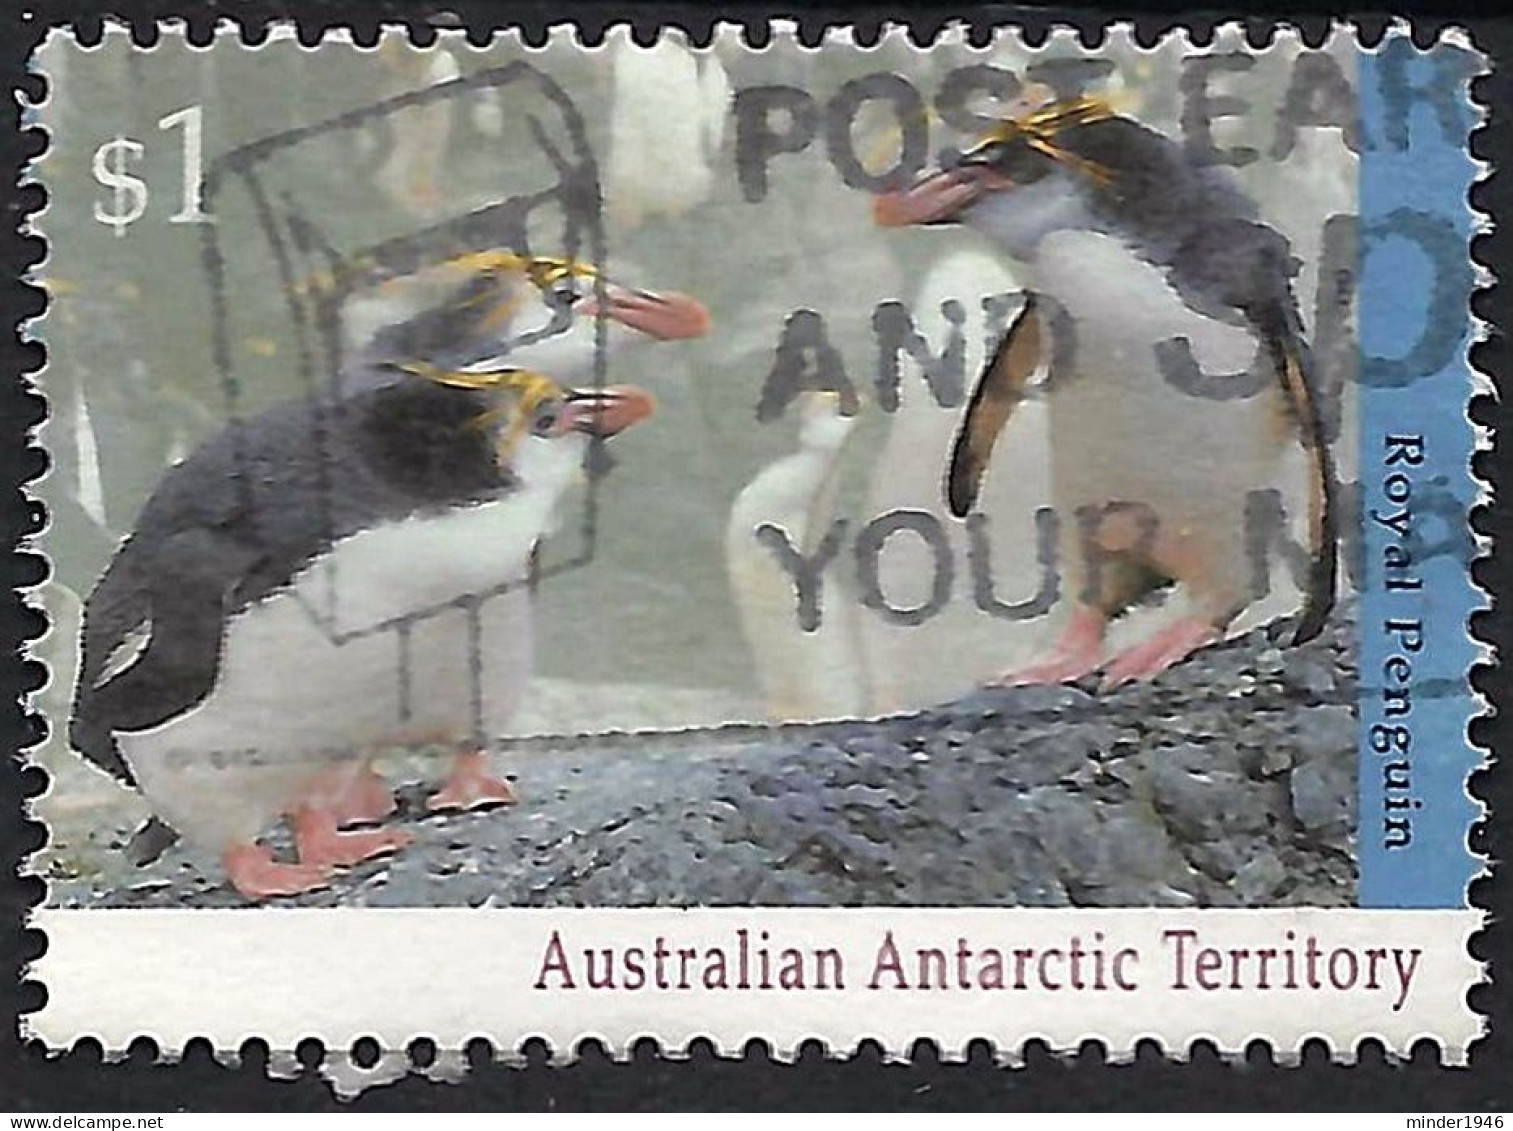 AUSTRALIAN ANTARCTIC TERRITORY (AAT) 1992 QEII $1 Multicoloured, Wildlife-Royal Penguin SG94 Used - Oblitérés